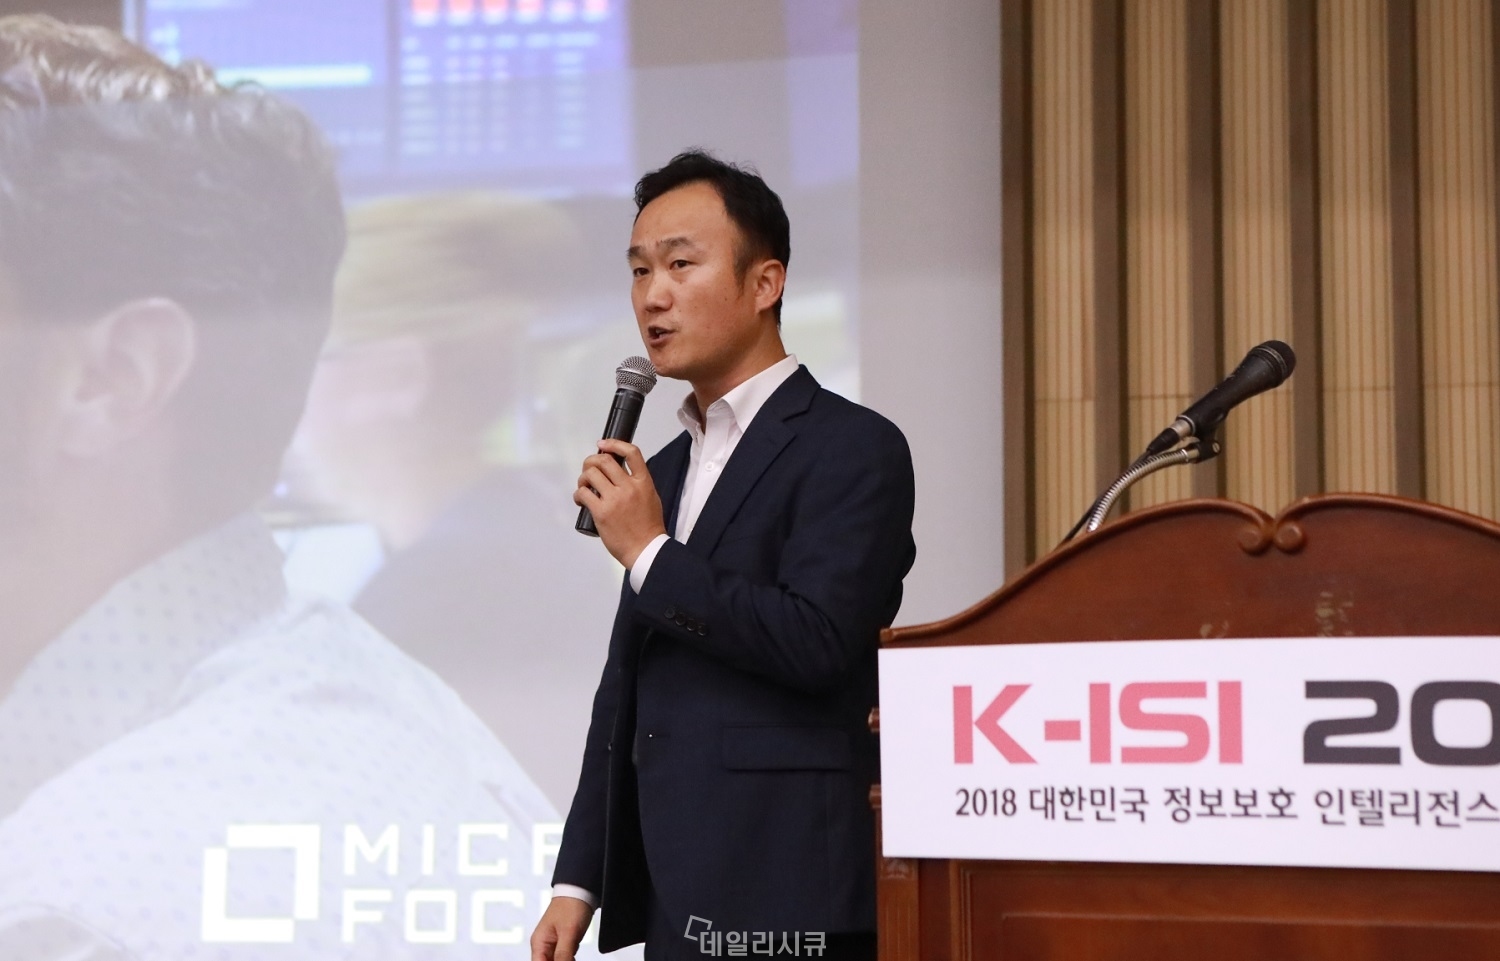 ▲ K-ISI 2018에서 마이크로포커스(Micro Focus) 황원섭 차장이 '글로벌 사이버위협 인텔리전스 활용 및 구현 방안'에 대해 강연을 진행하고 있다.